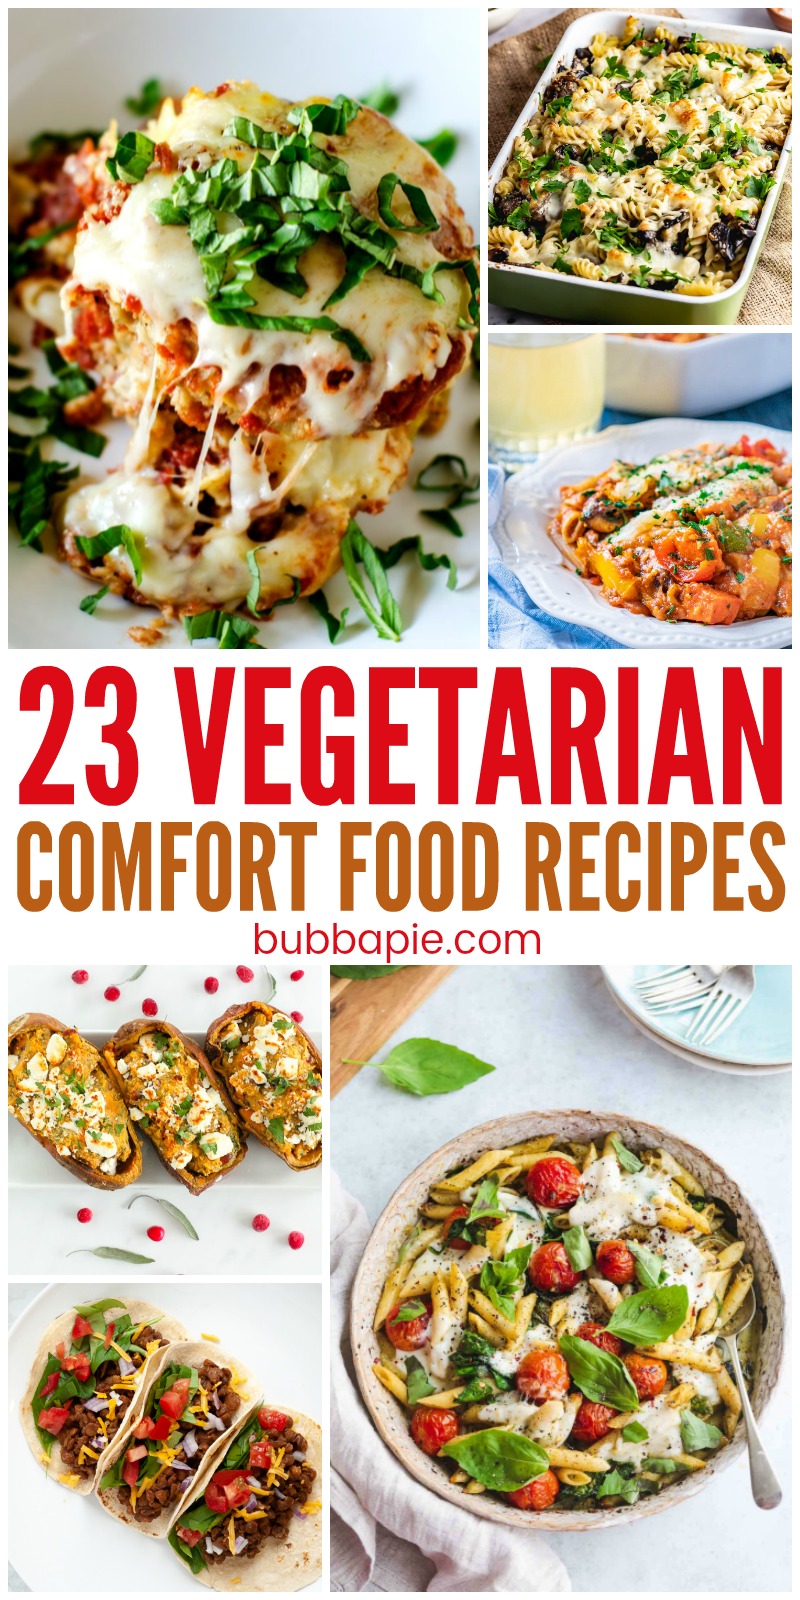 23 Vegetarian Comfort Food Recipes